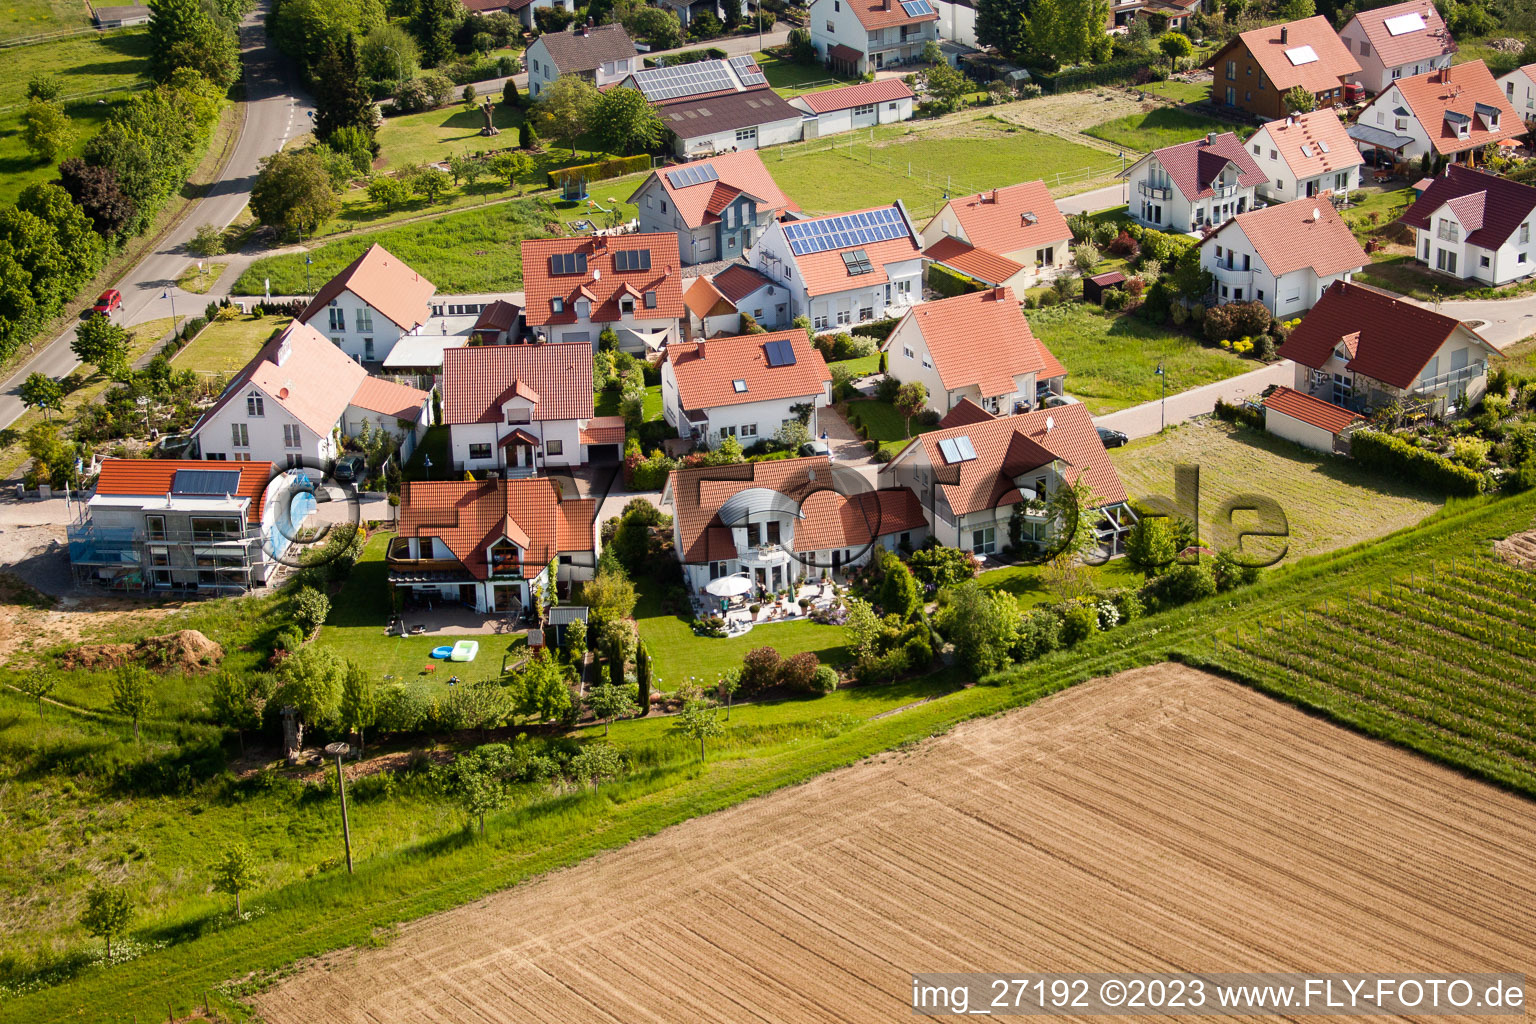 District Mörzheim in Landau in der Pfalz in the state Rhineland-Palatinate, Germany from the drone perspective